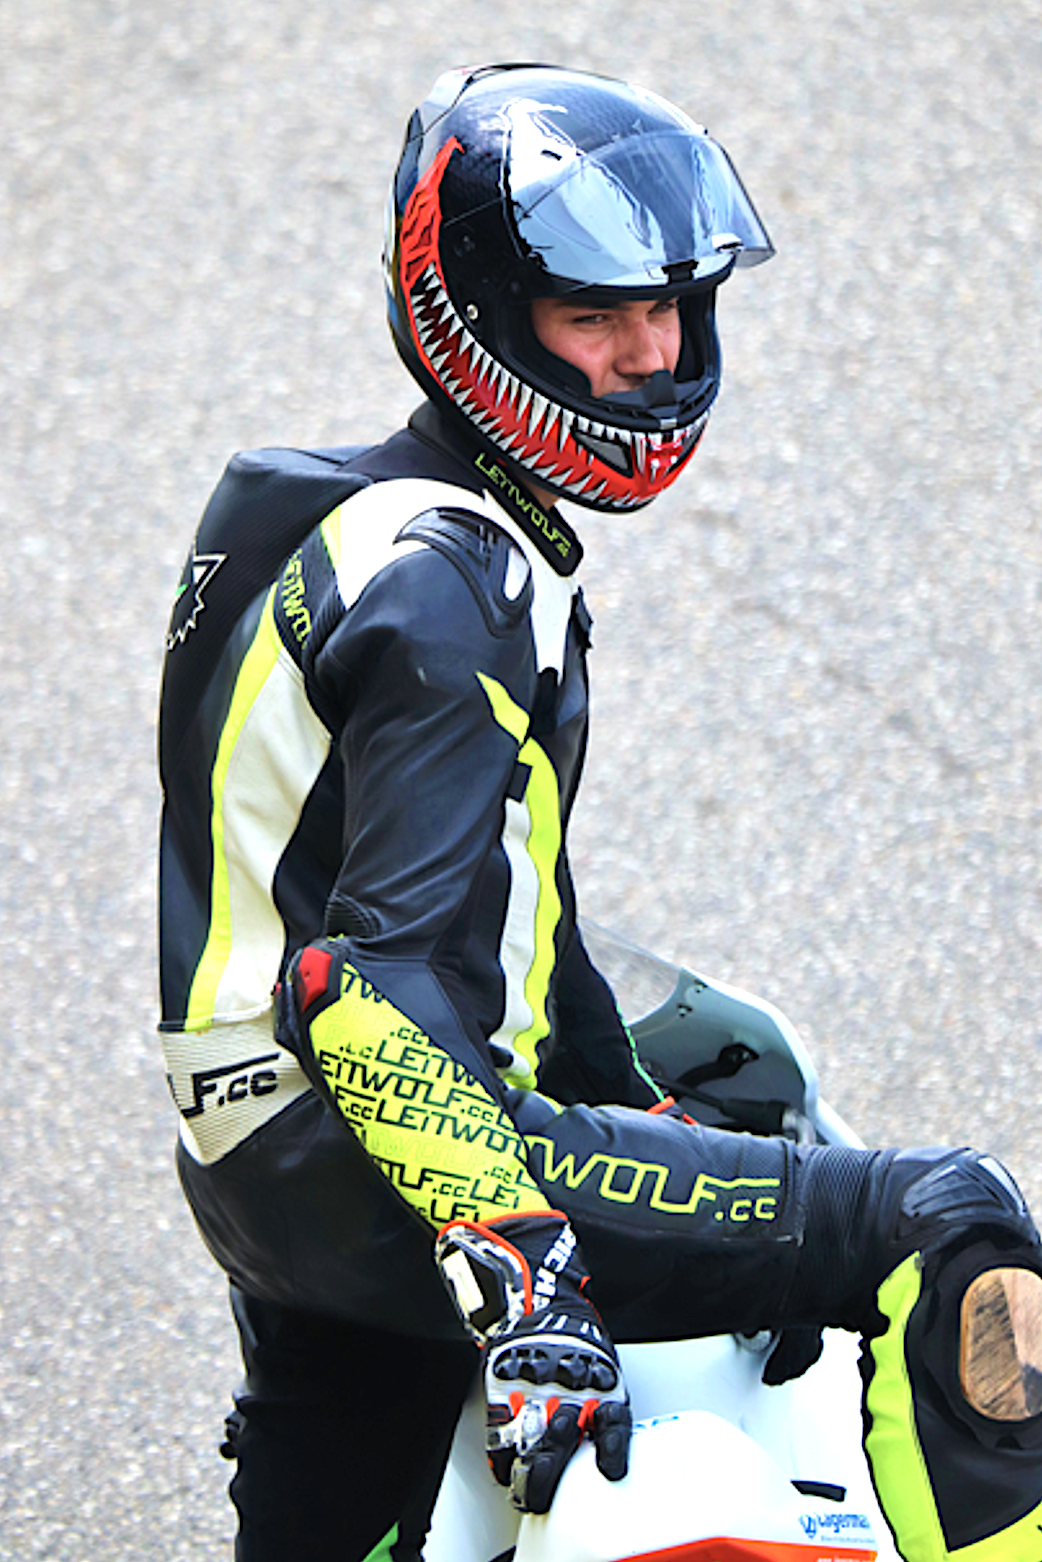 Manuel Hechl Racing Team Austria